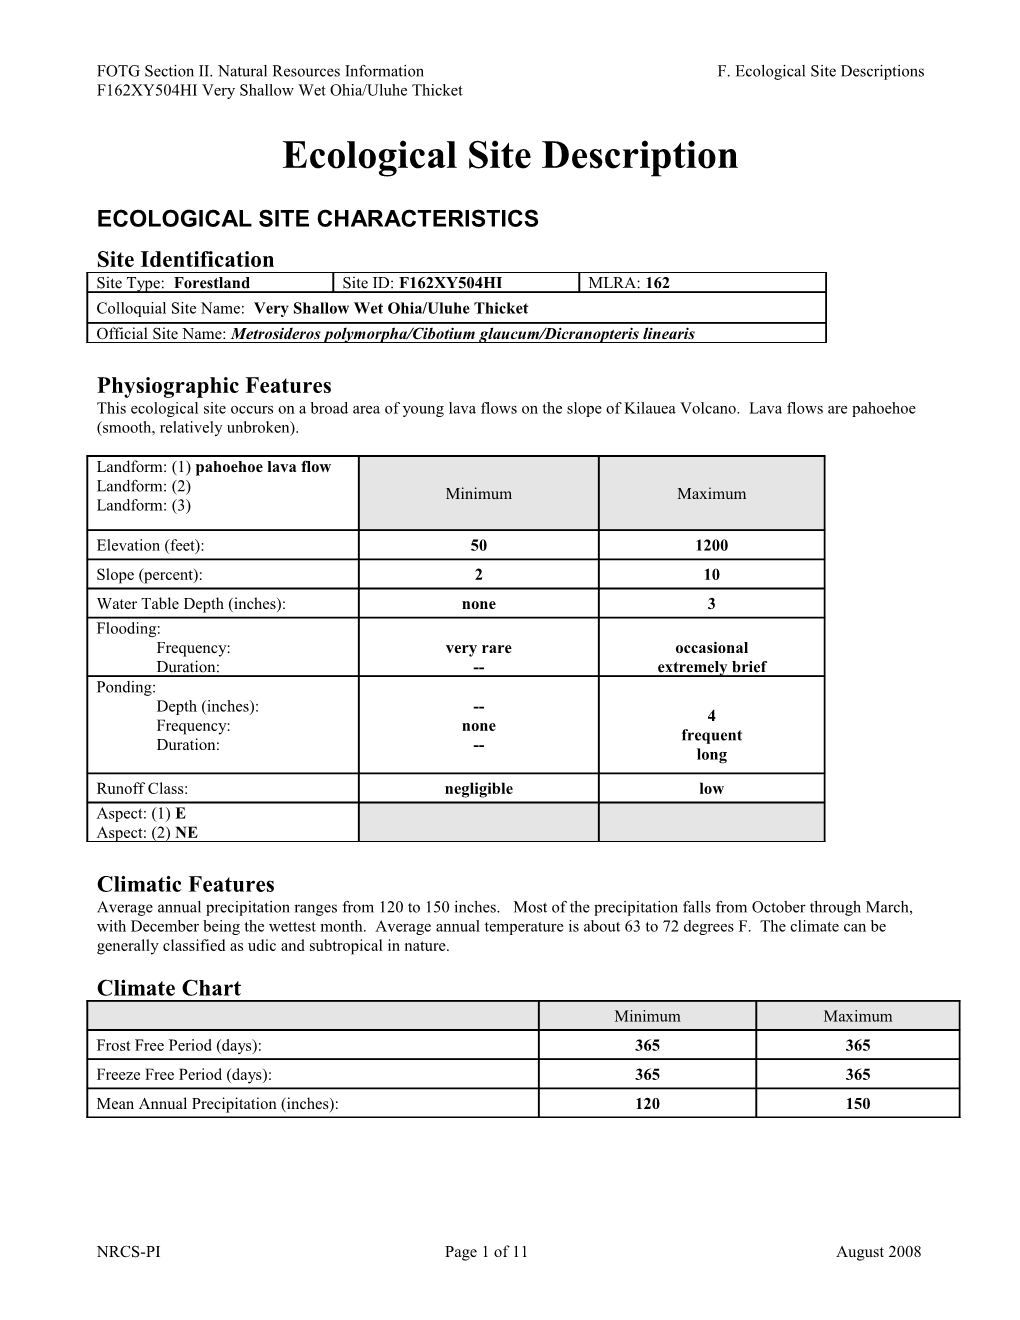 FOTG Section II. Natural Resources Information F. Ecological Site Descriptions